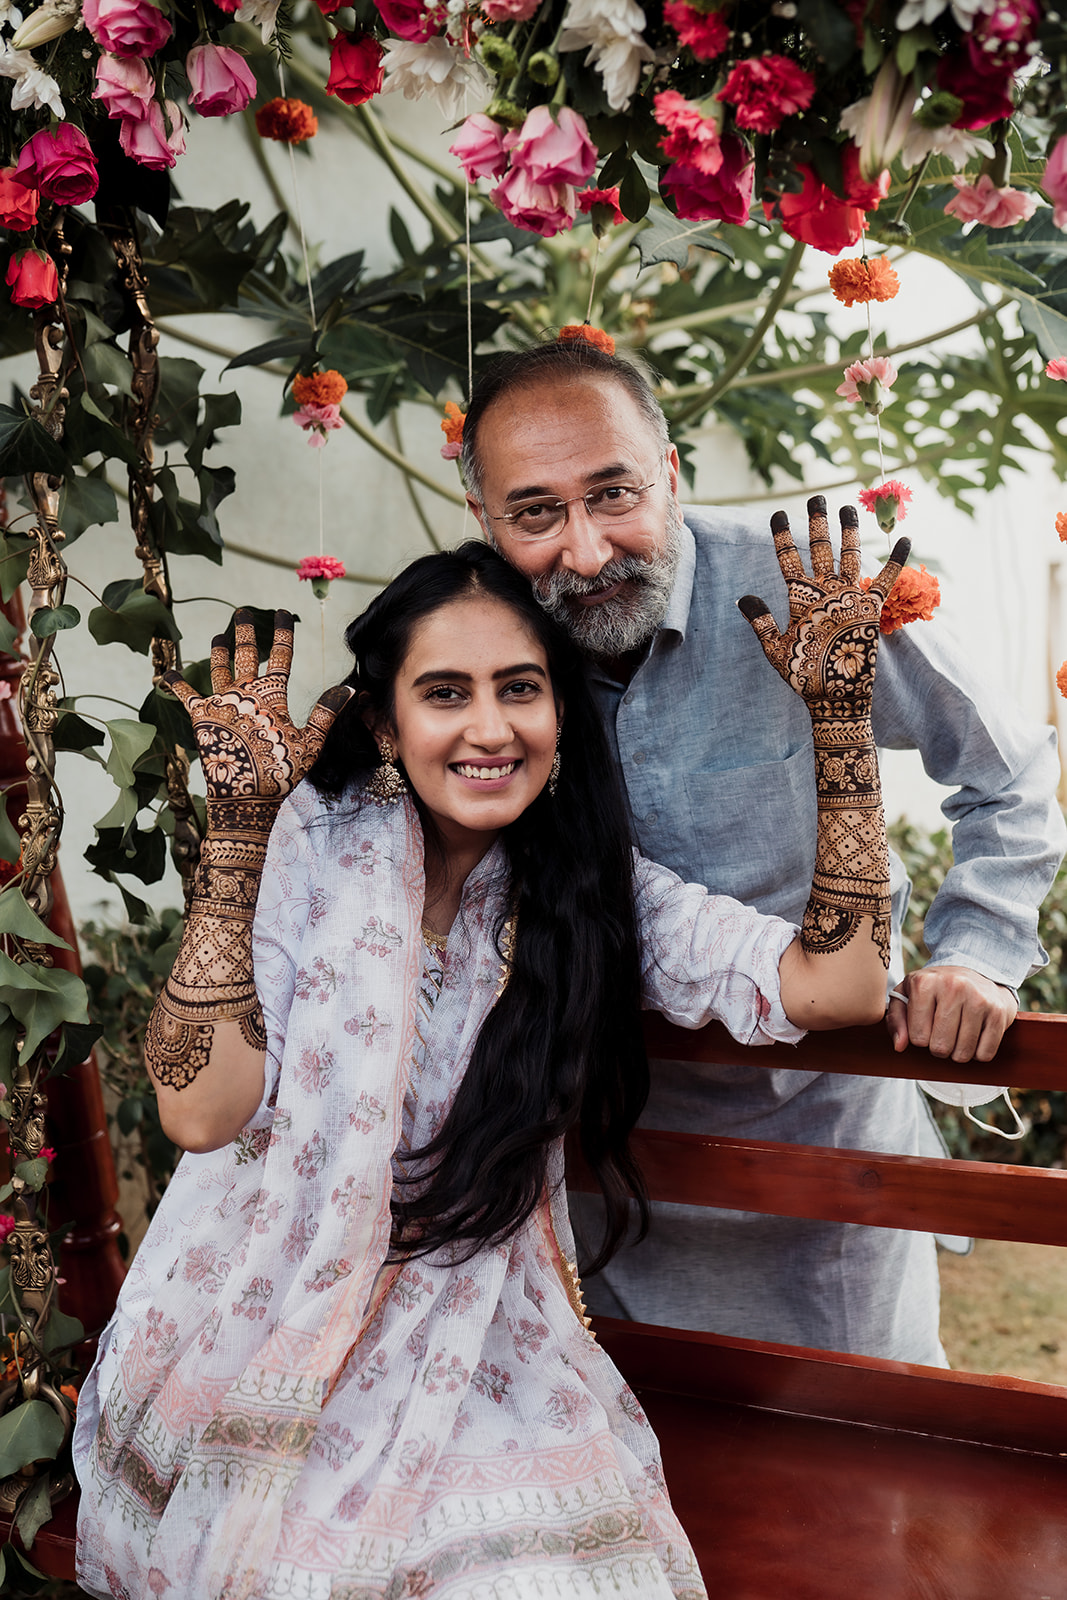 Mehendi elegance: The bride showcases intricate mehendi designs on her hands in a beautiful image.